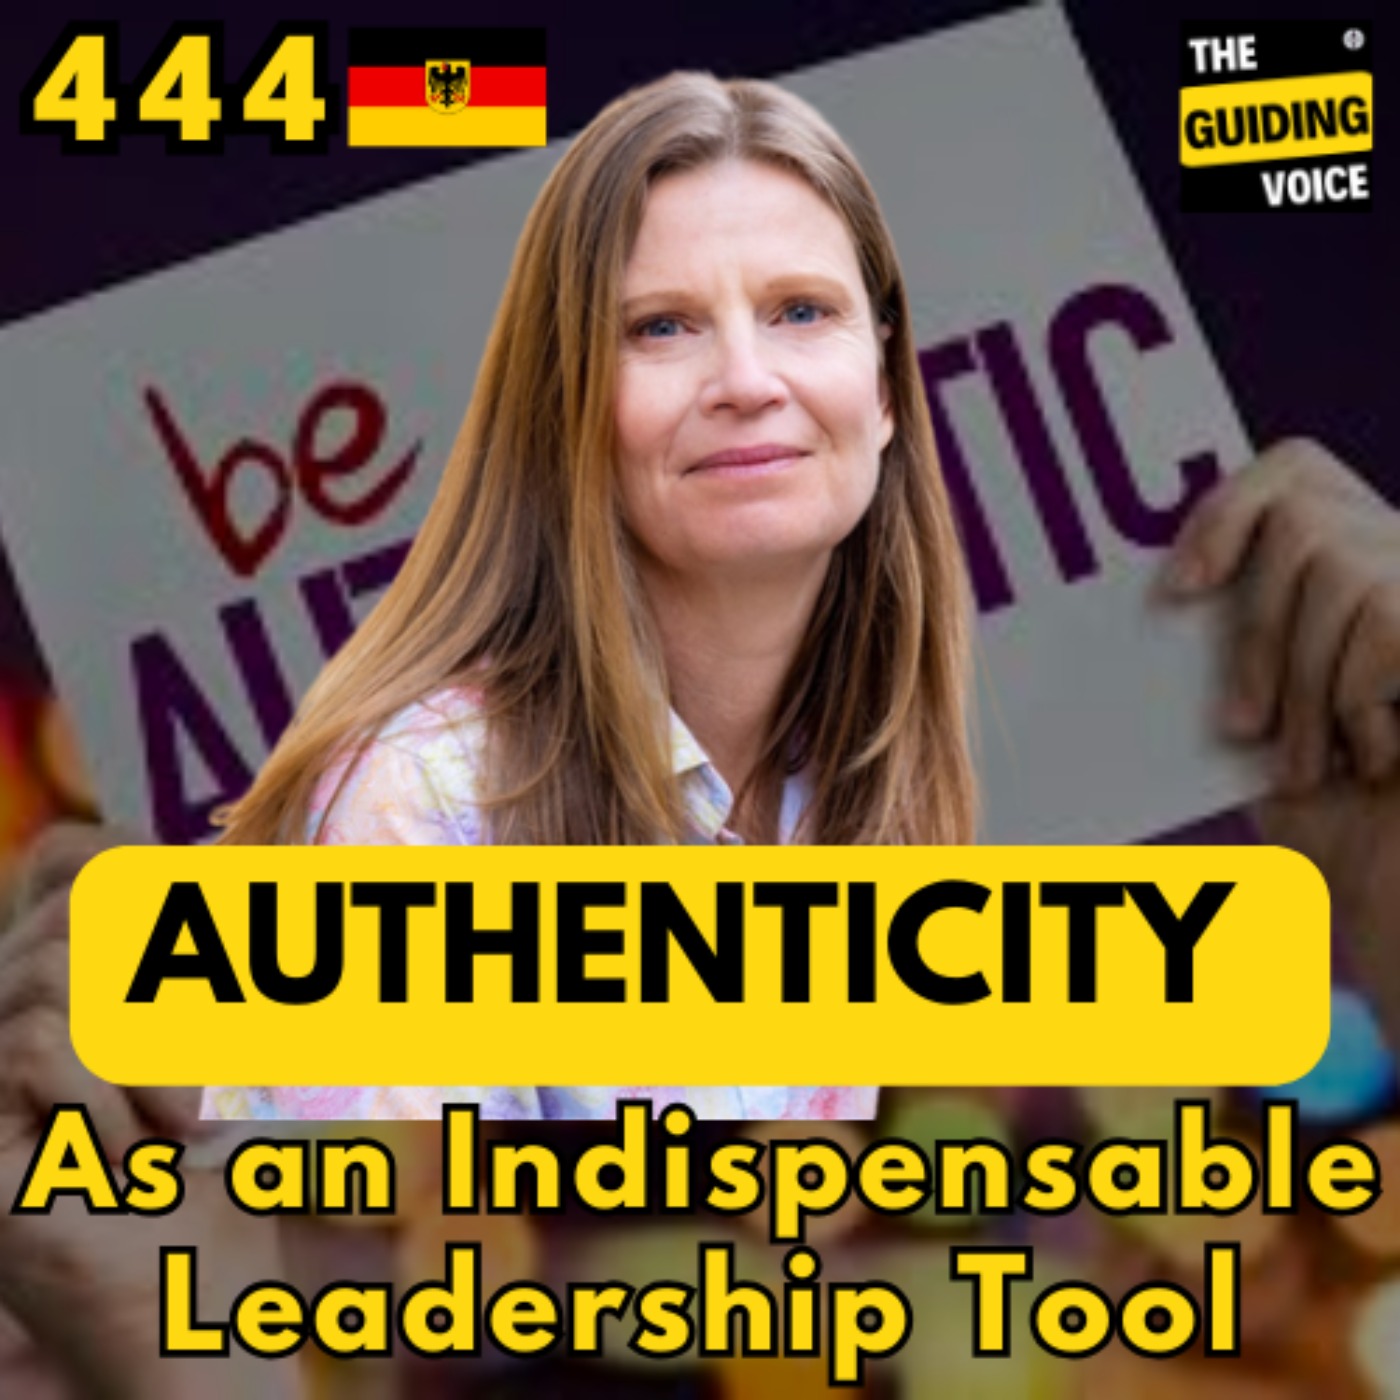 Authenticity as an indispensable leadership tool | #TGVGLOBALSPEAKERFESTIVAL | Daniela Hartmann | #TGV444